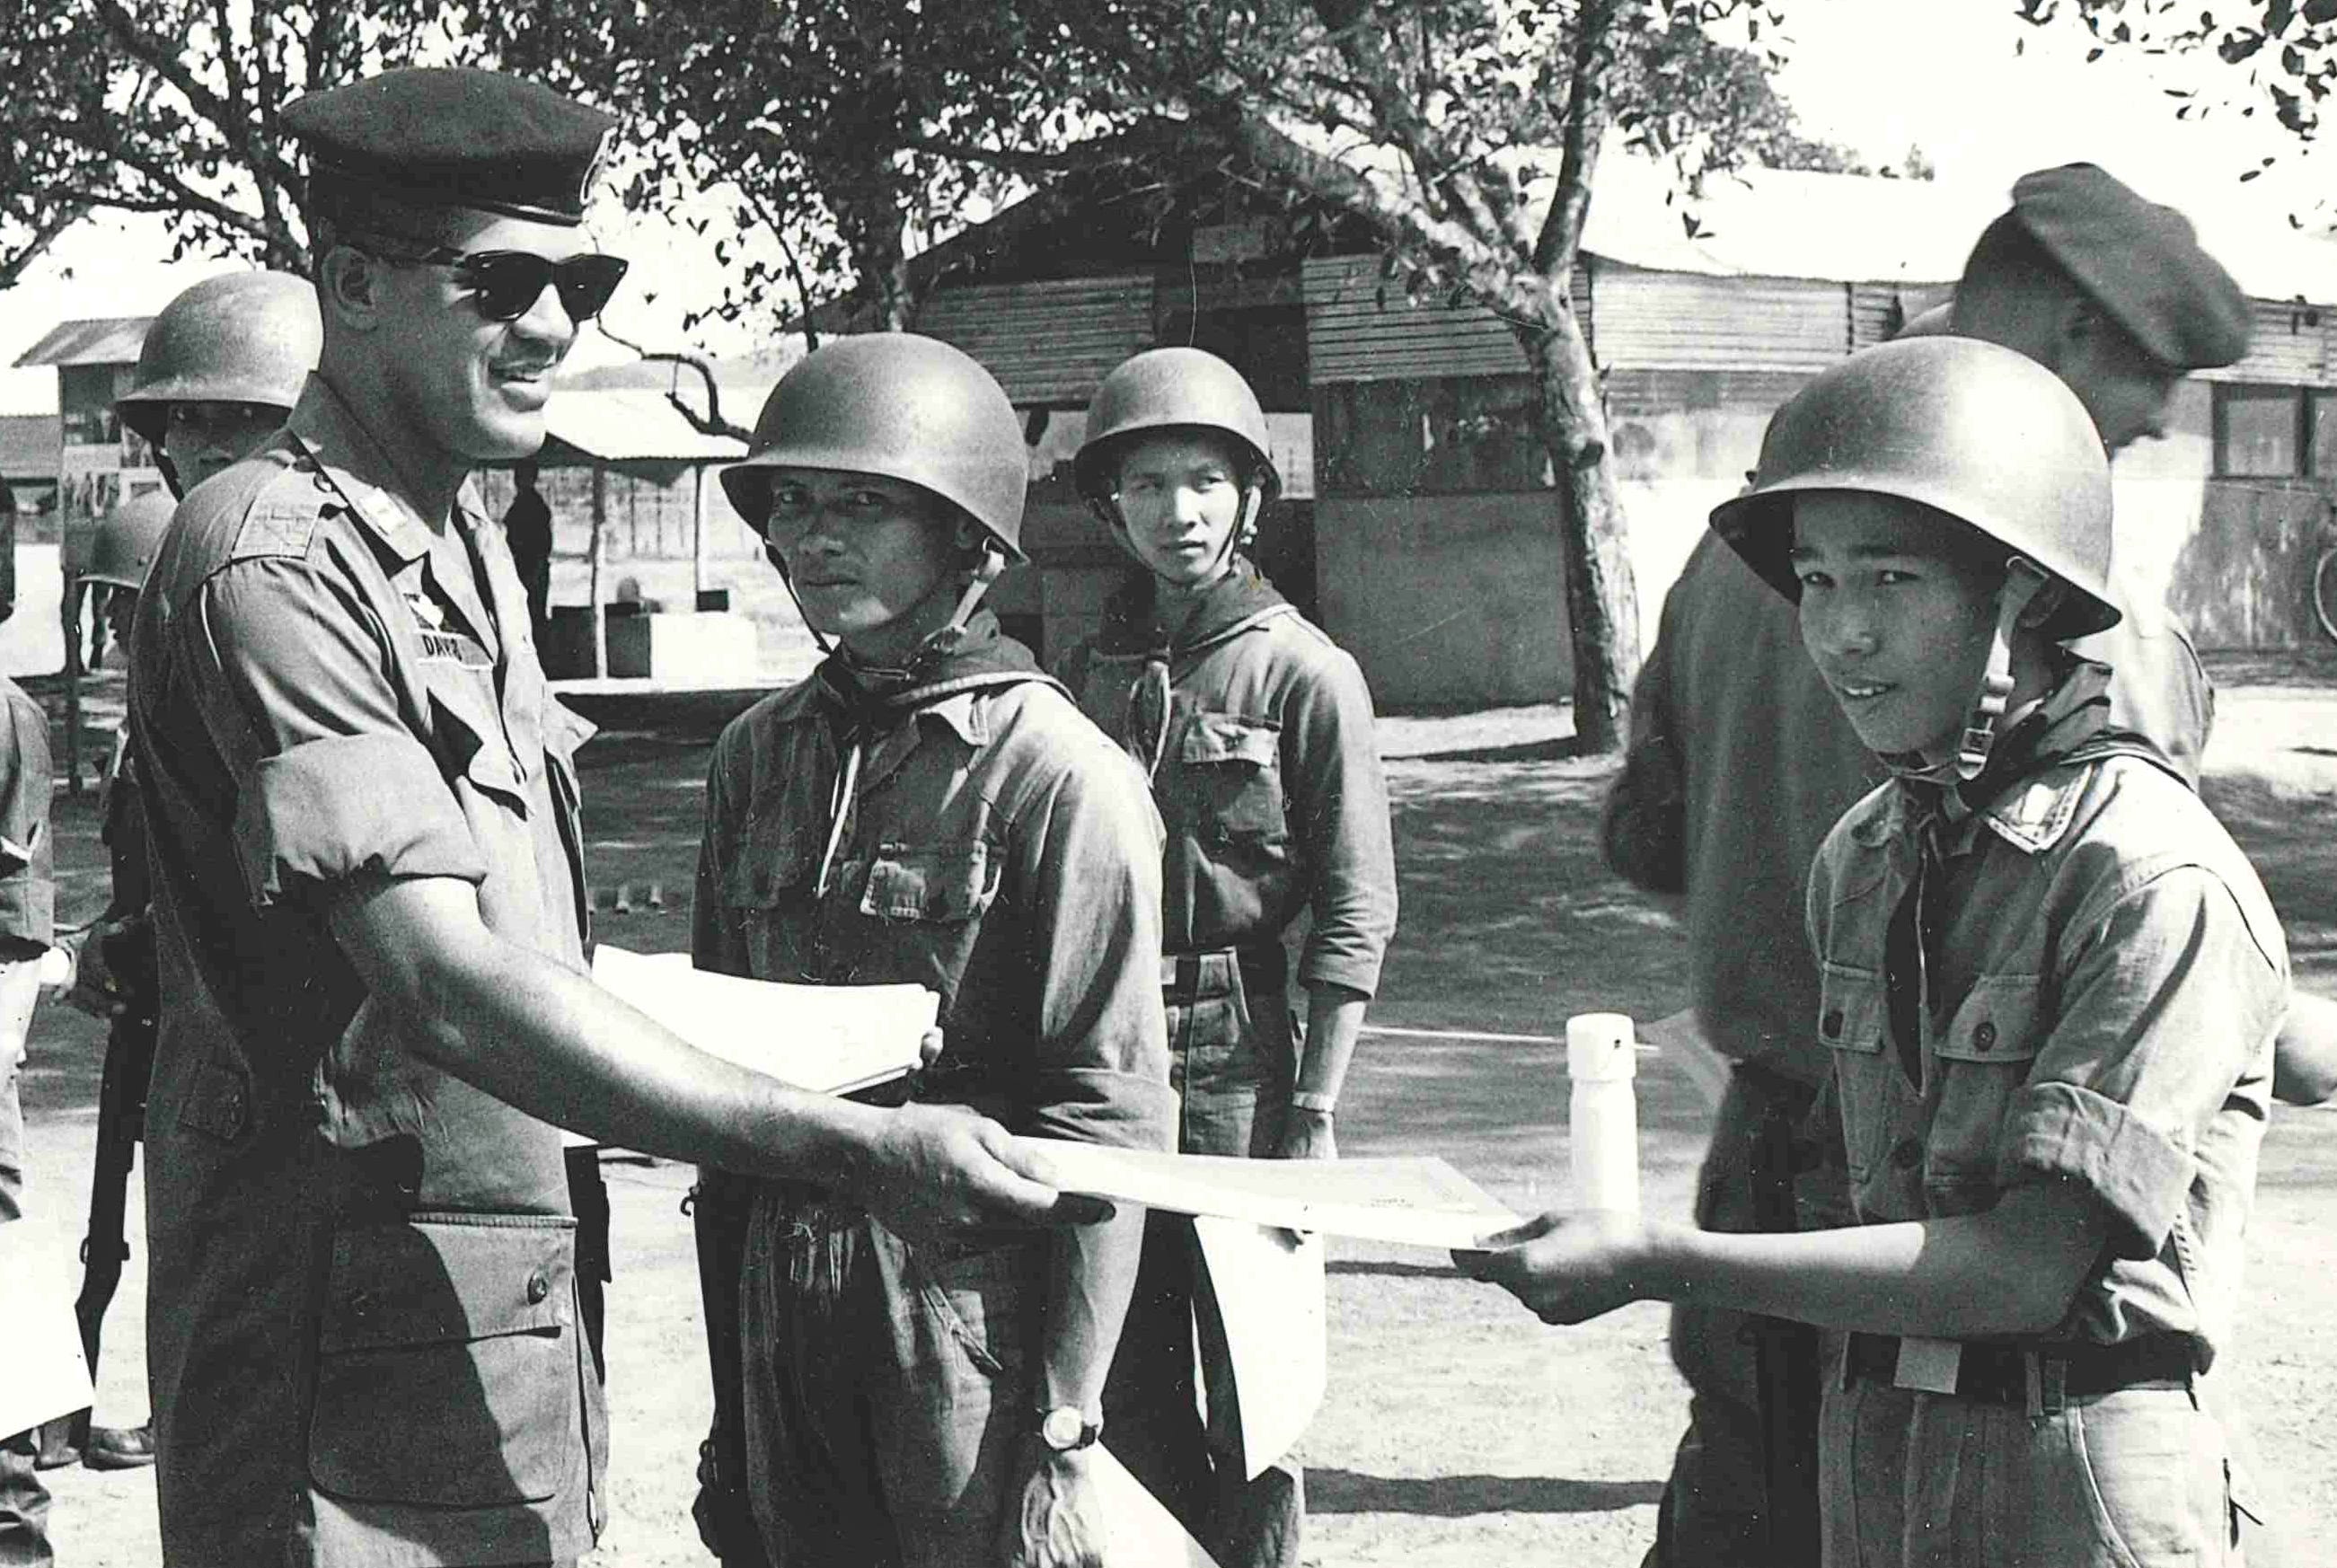 Then-Capt. Paris D. Davis in South Vietnam, during the war, with soldier trainees.